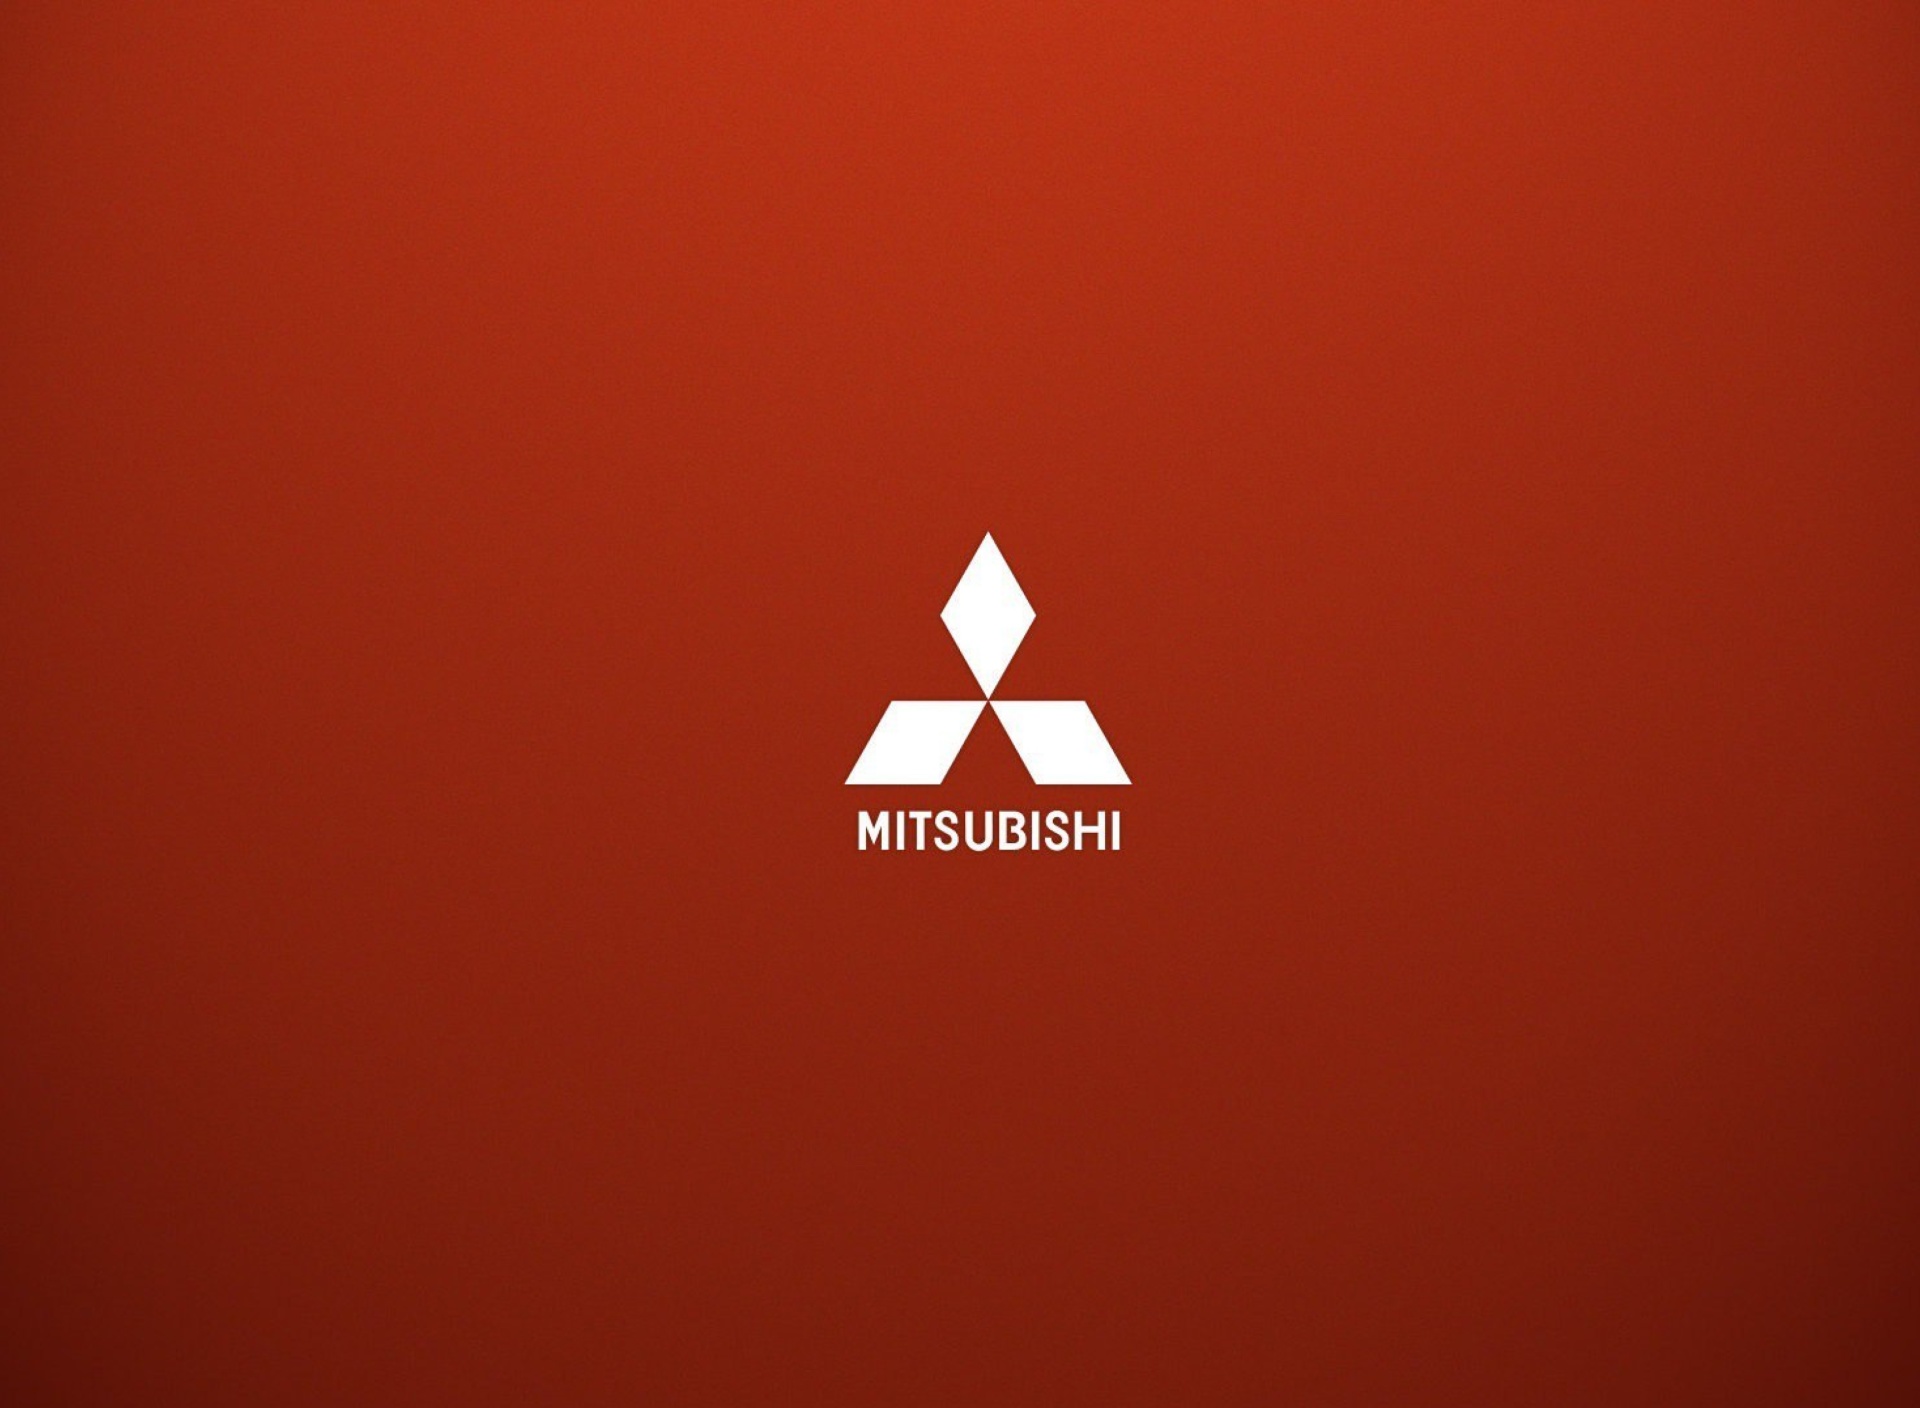 Mitsubishi Logo Wallpaper For Sony Xperia Z